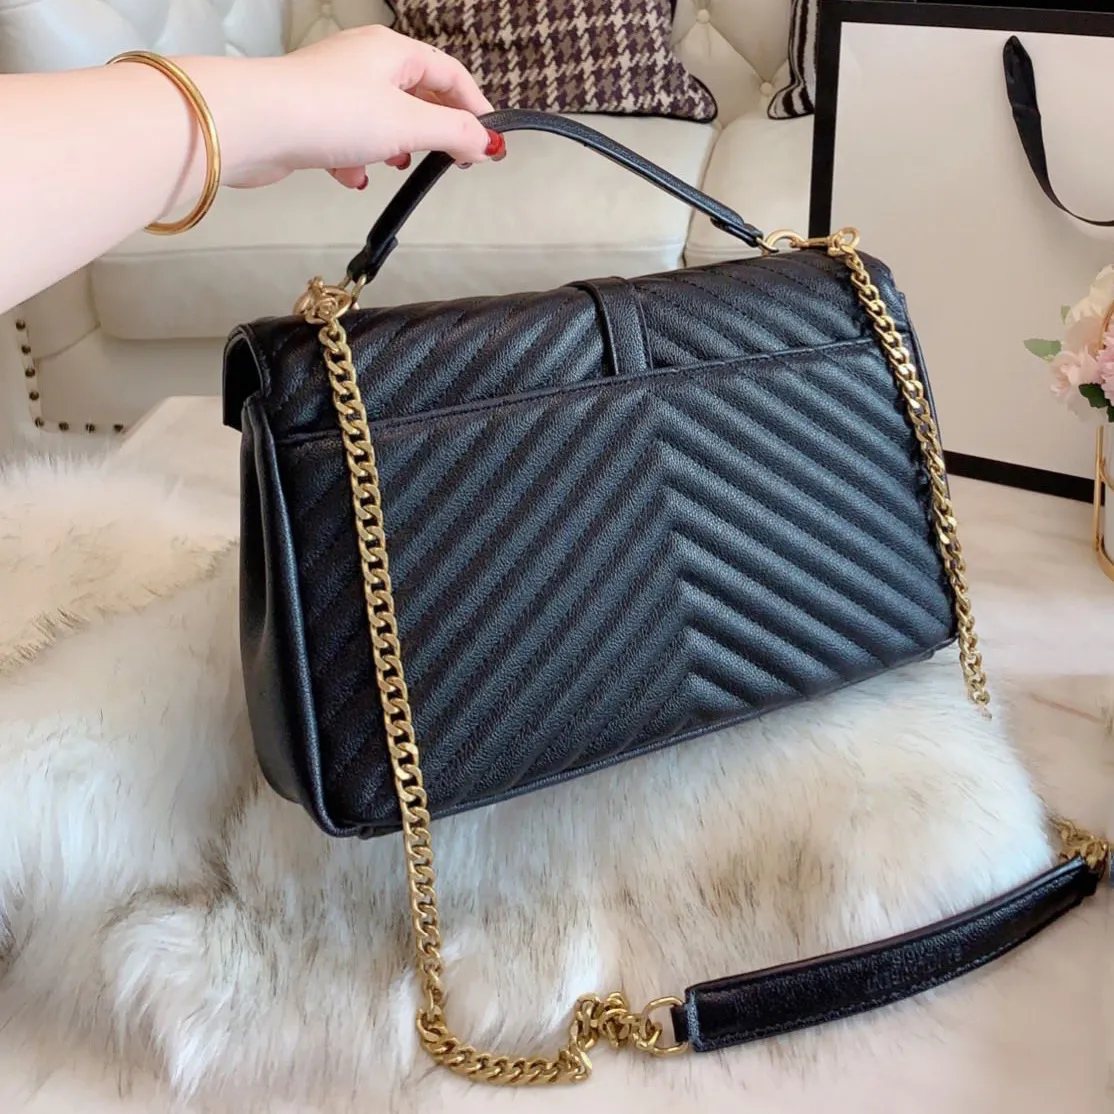 Top Chain luxury Designers bag Wallets 2021 fashion high quality Purse lady Handbags women bags Hobo purses Famous Designer Cross body totes female handbag hot